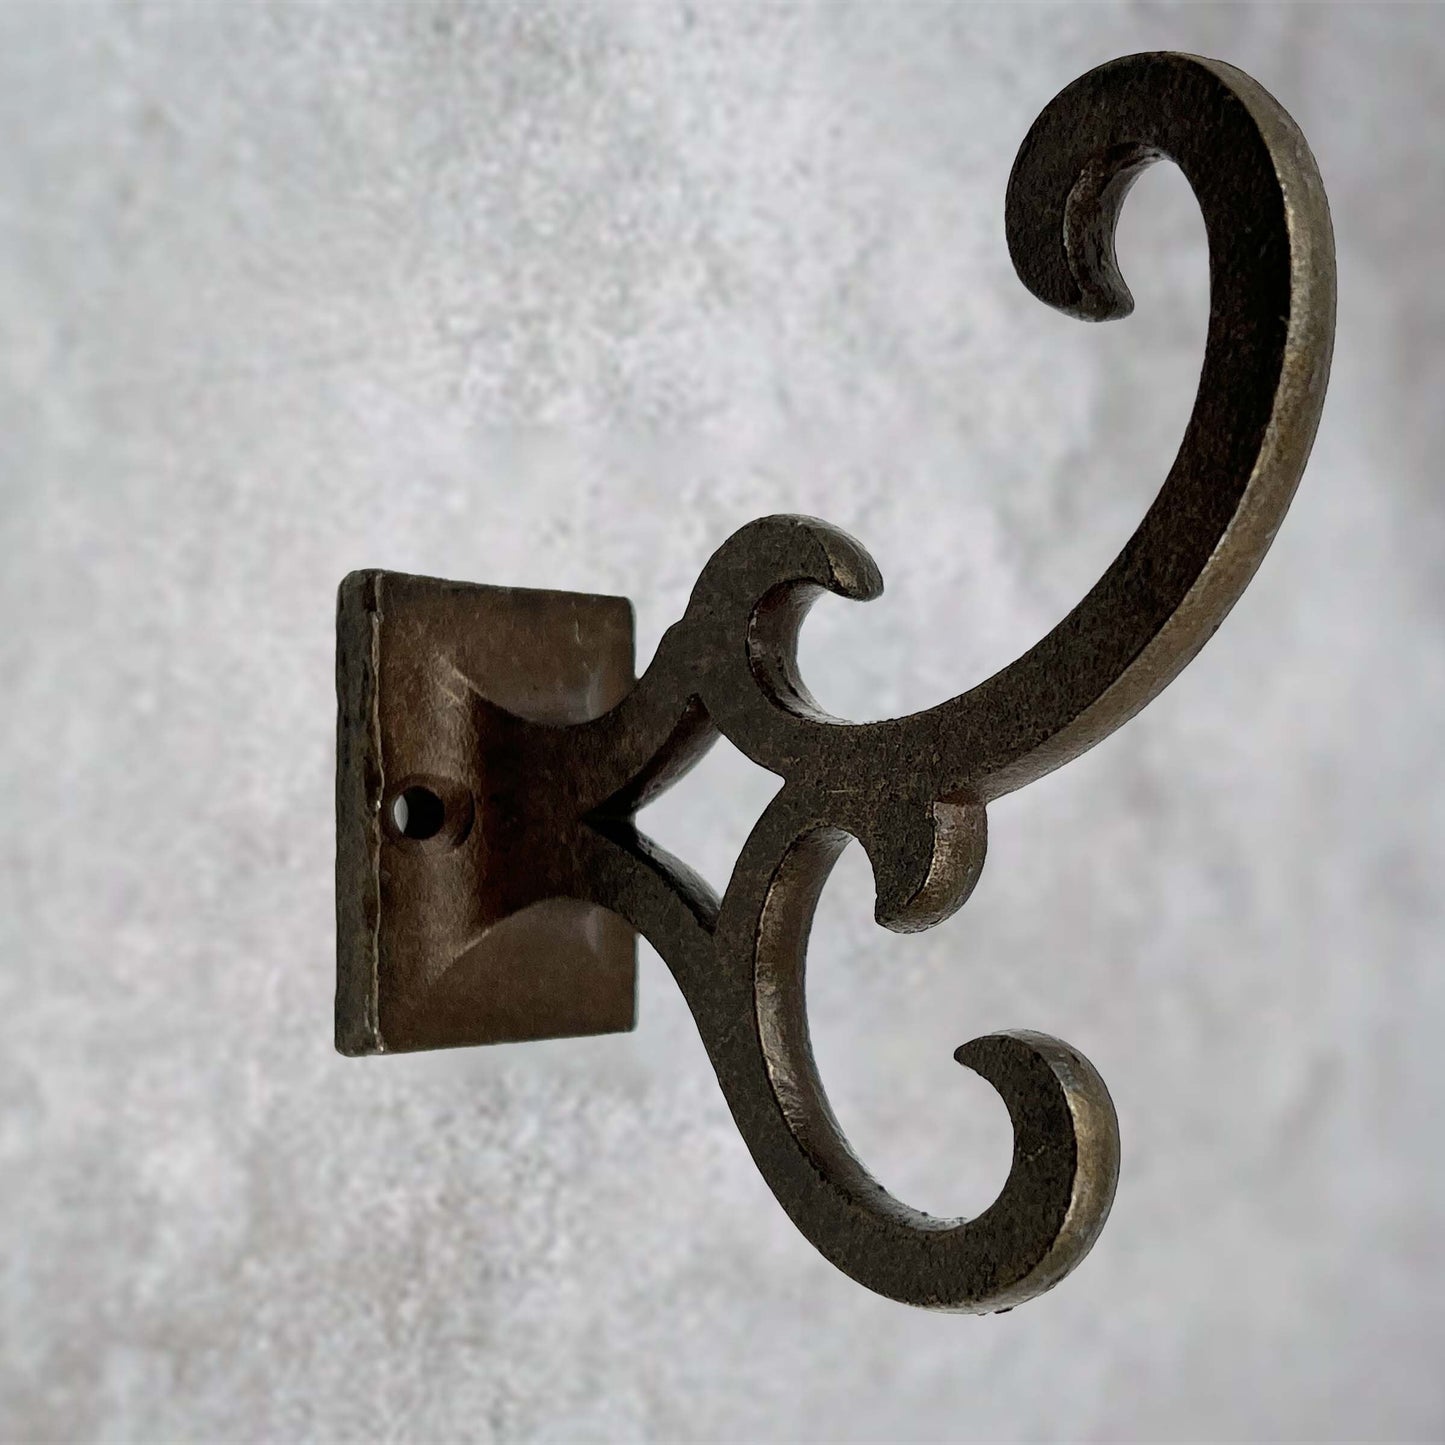 Metal Scroll Wall Hook Bronze Set of 6, Kitchen Cabinet Knobs Dresser Knobs Drawer Knobs Handles